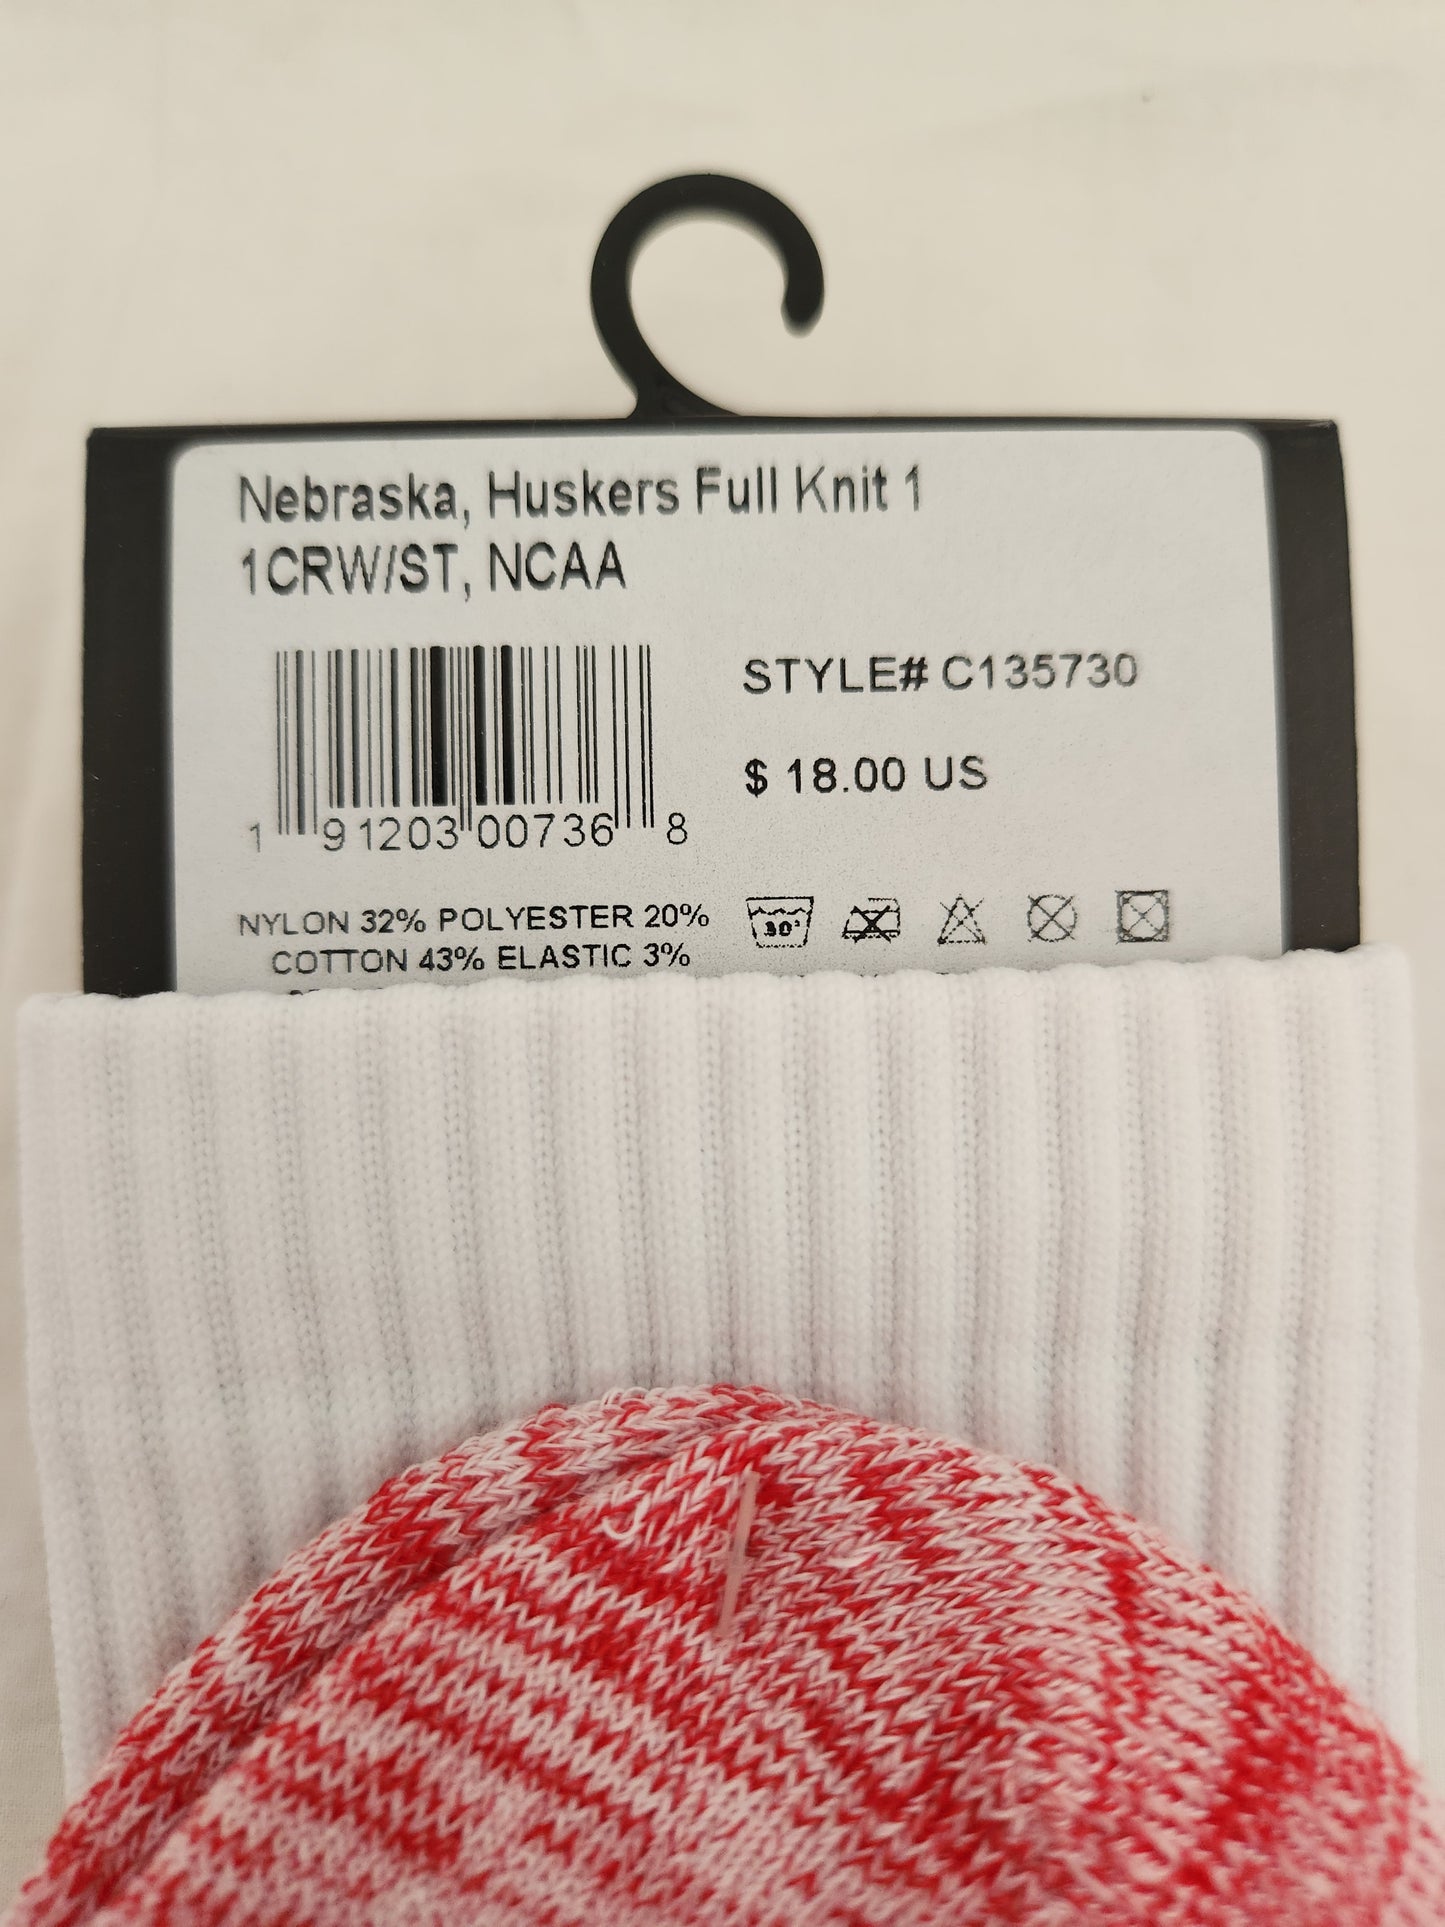 NWT - Strideline Men's White Nebraska Huskers Socks - M/L